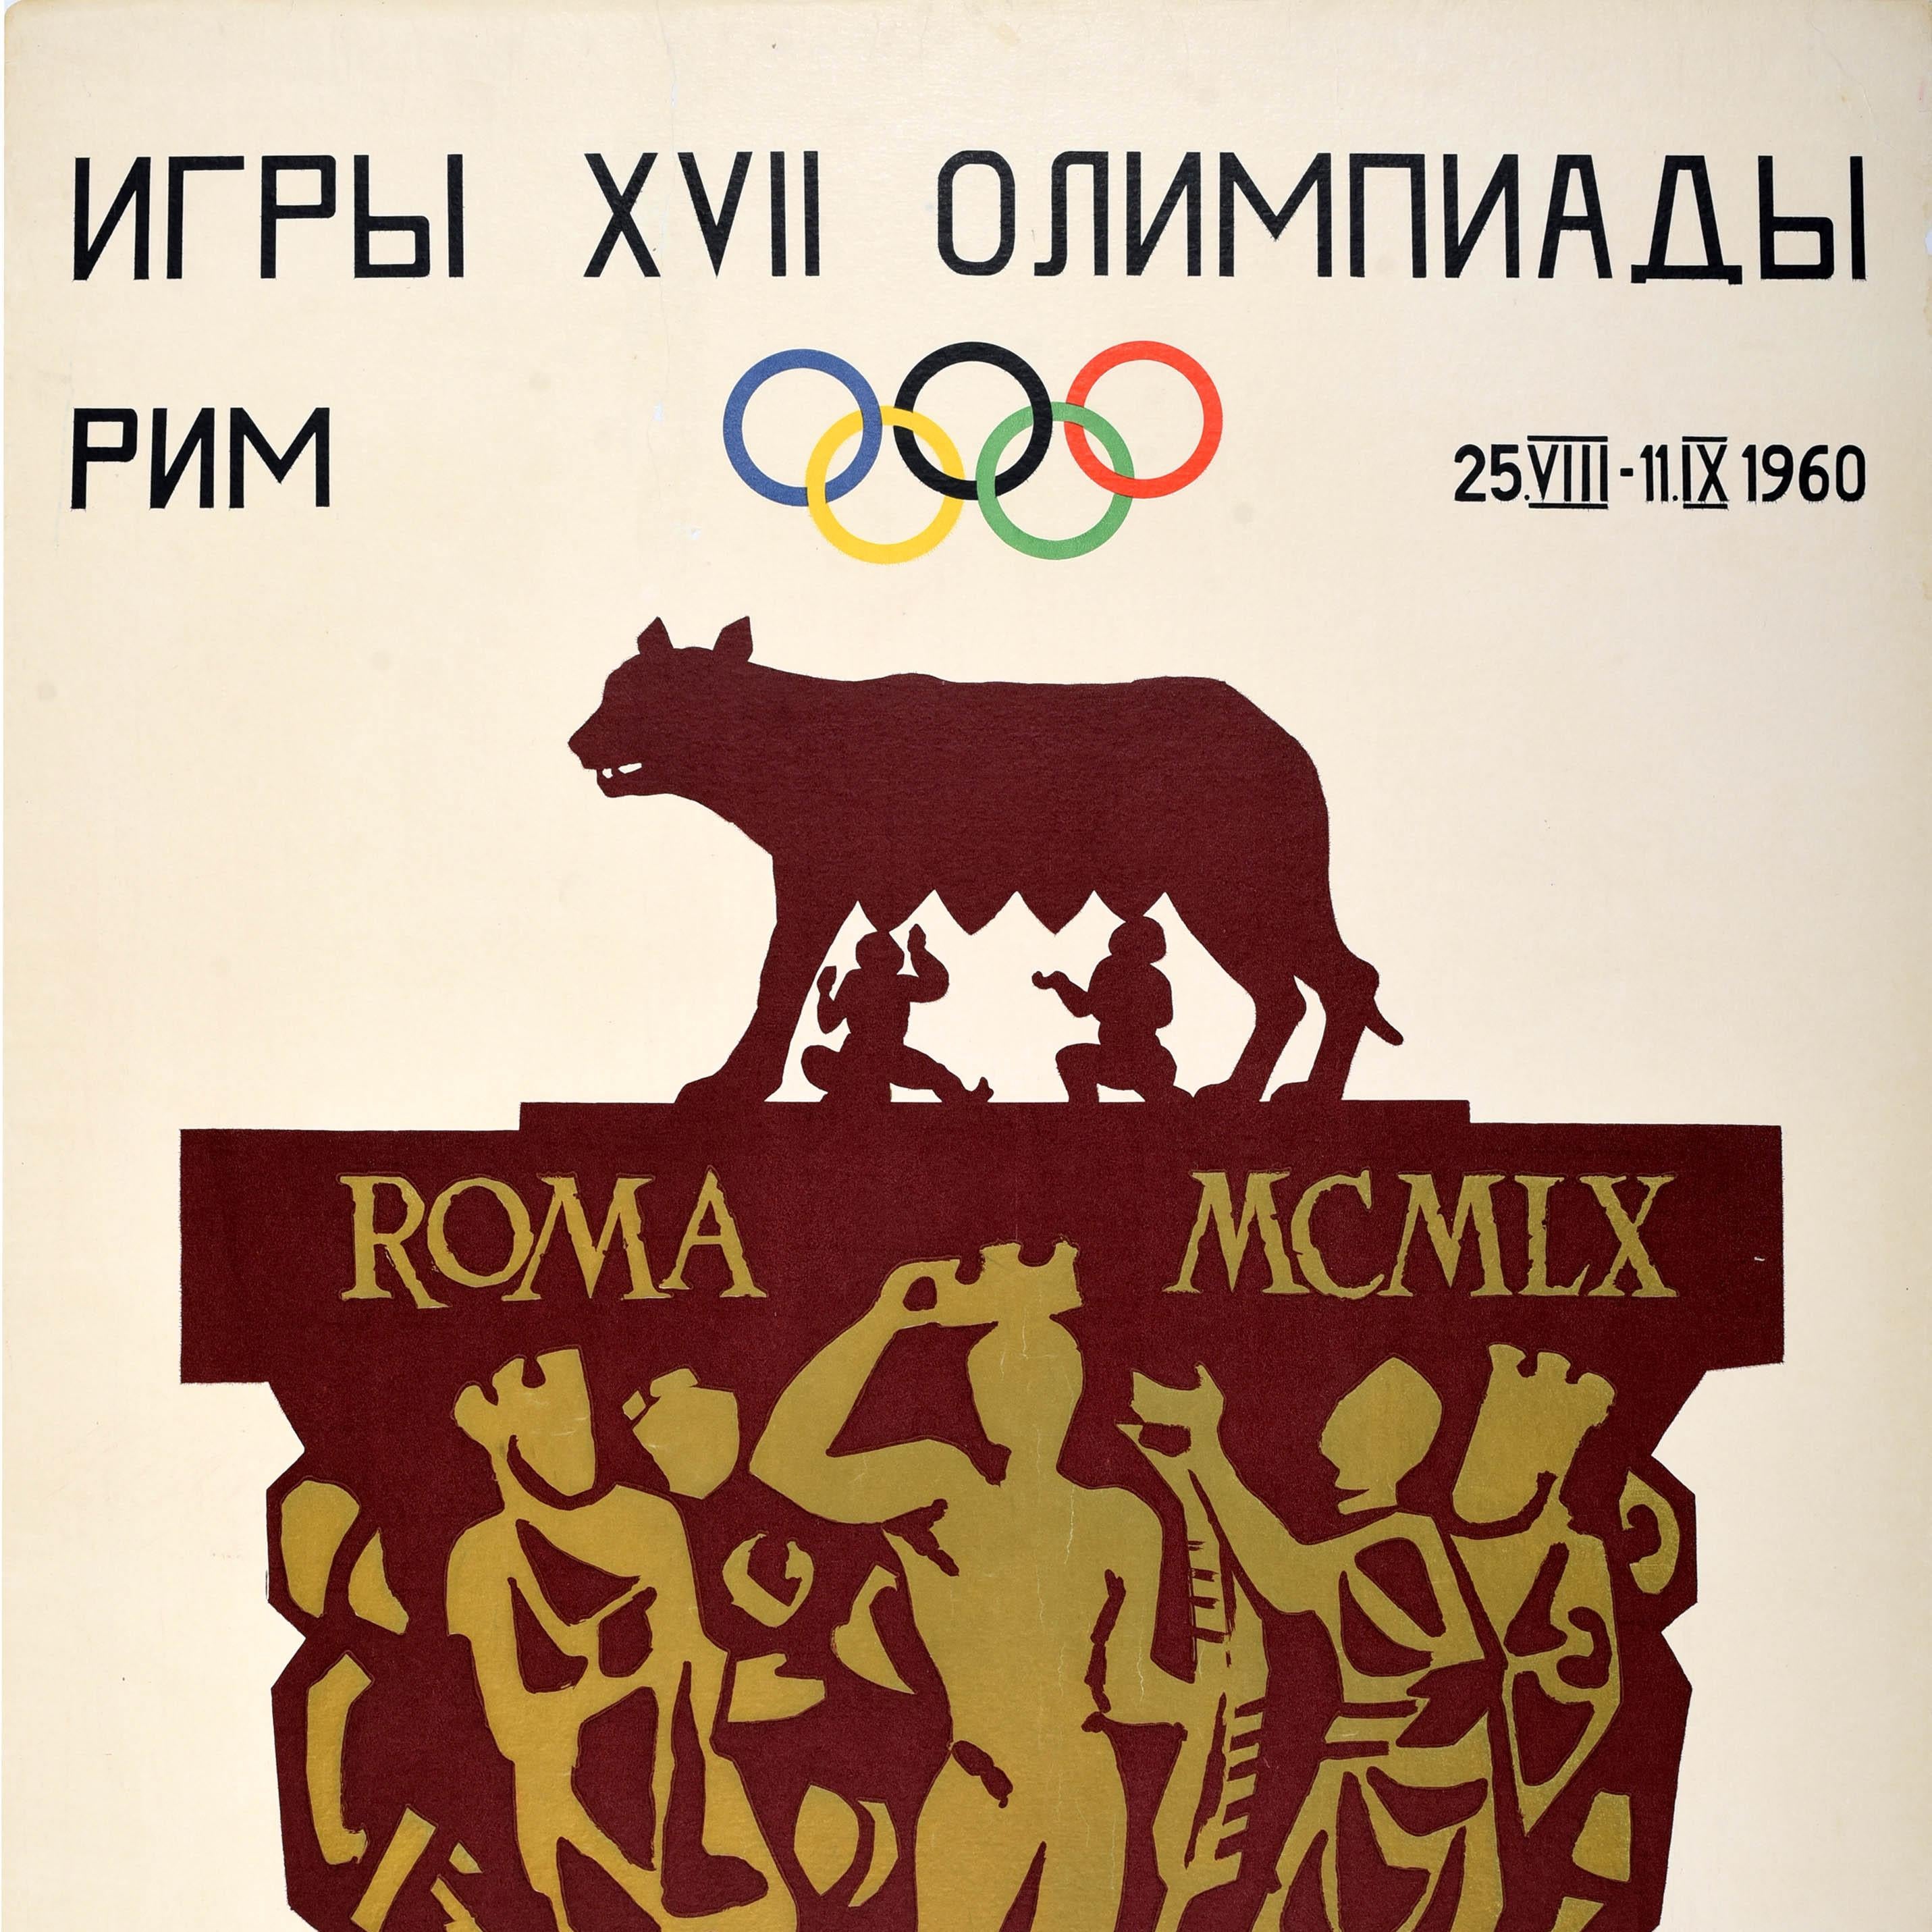 jeux olympiques rome